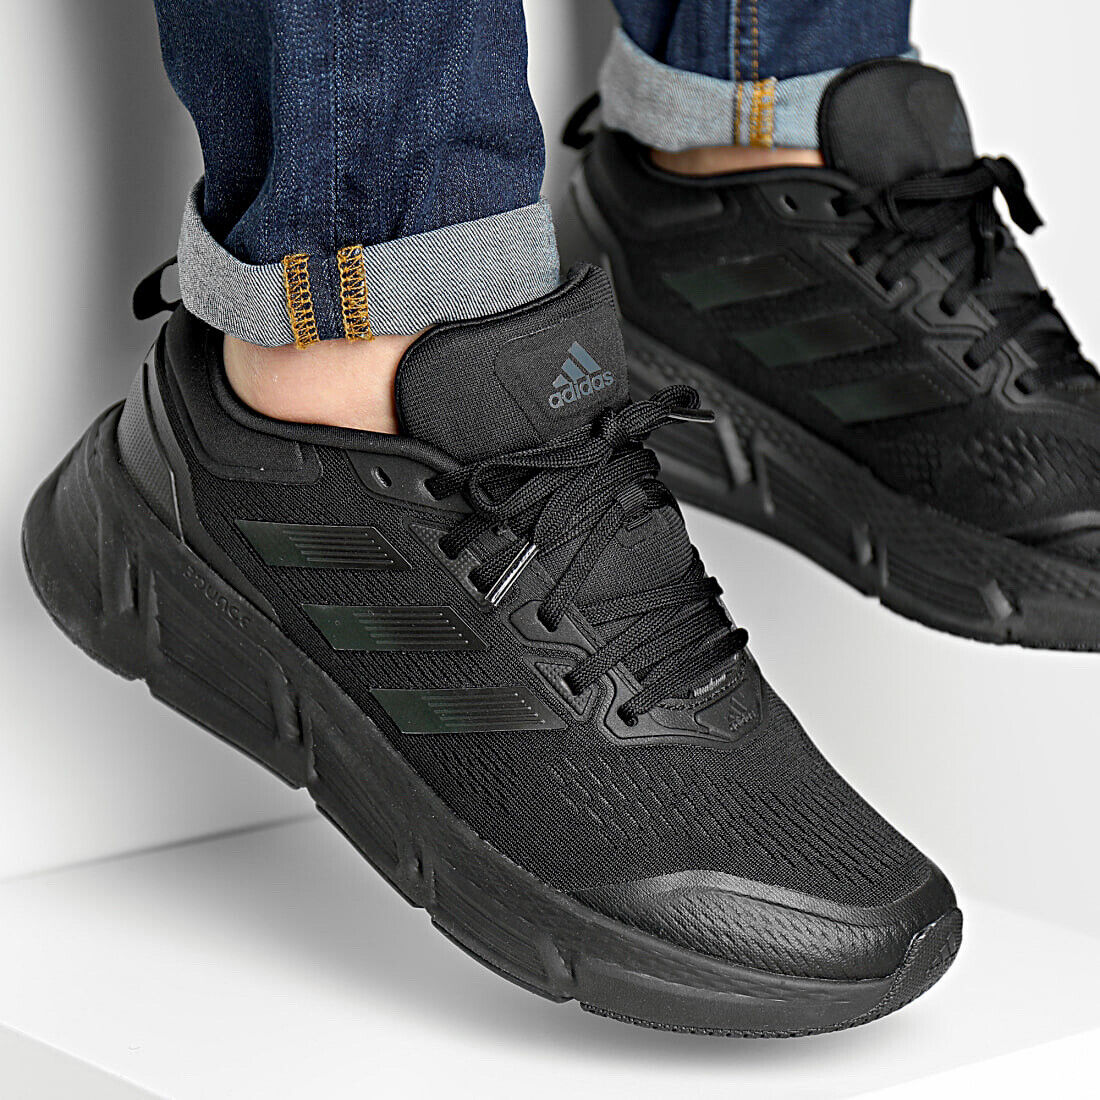 Adidas Questar Men's Running Shoe Black Athletic Sneaker Casual Trainers  #631 | eBay